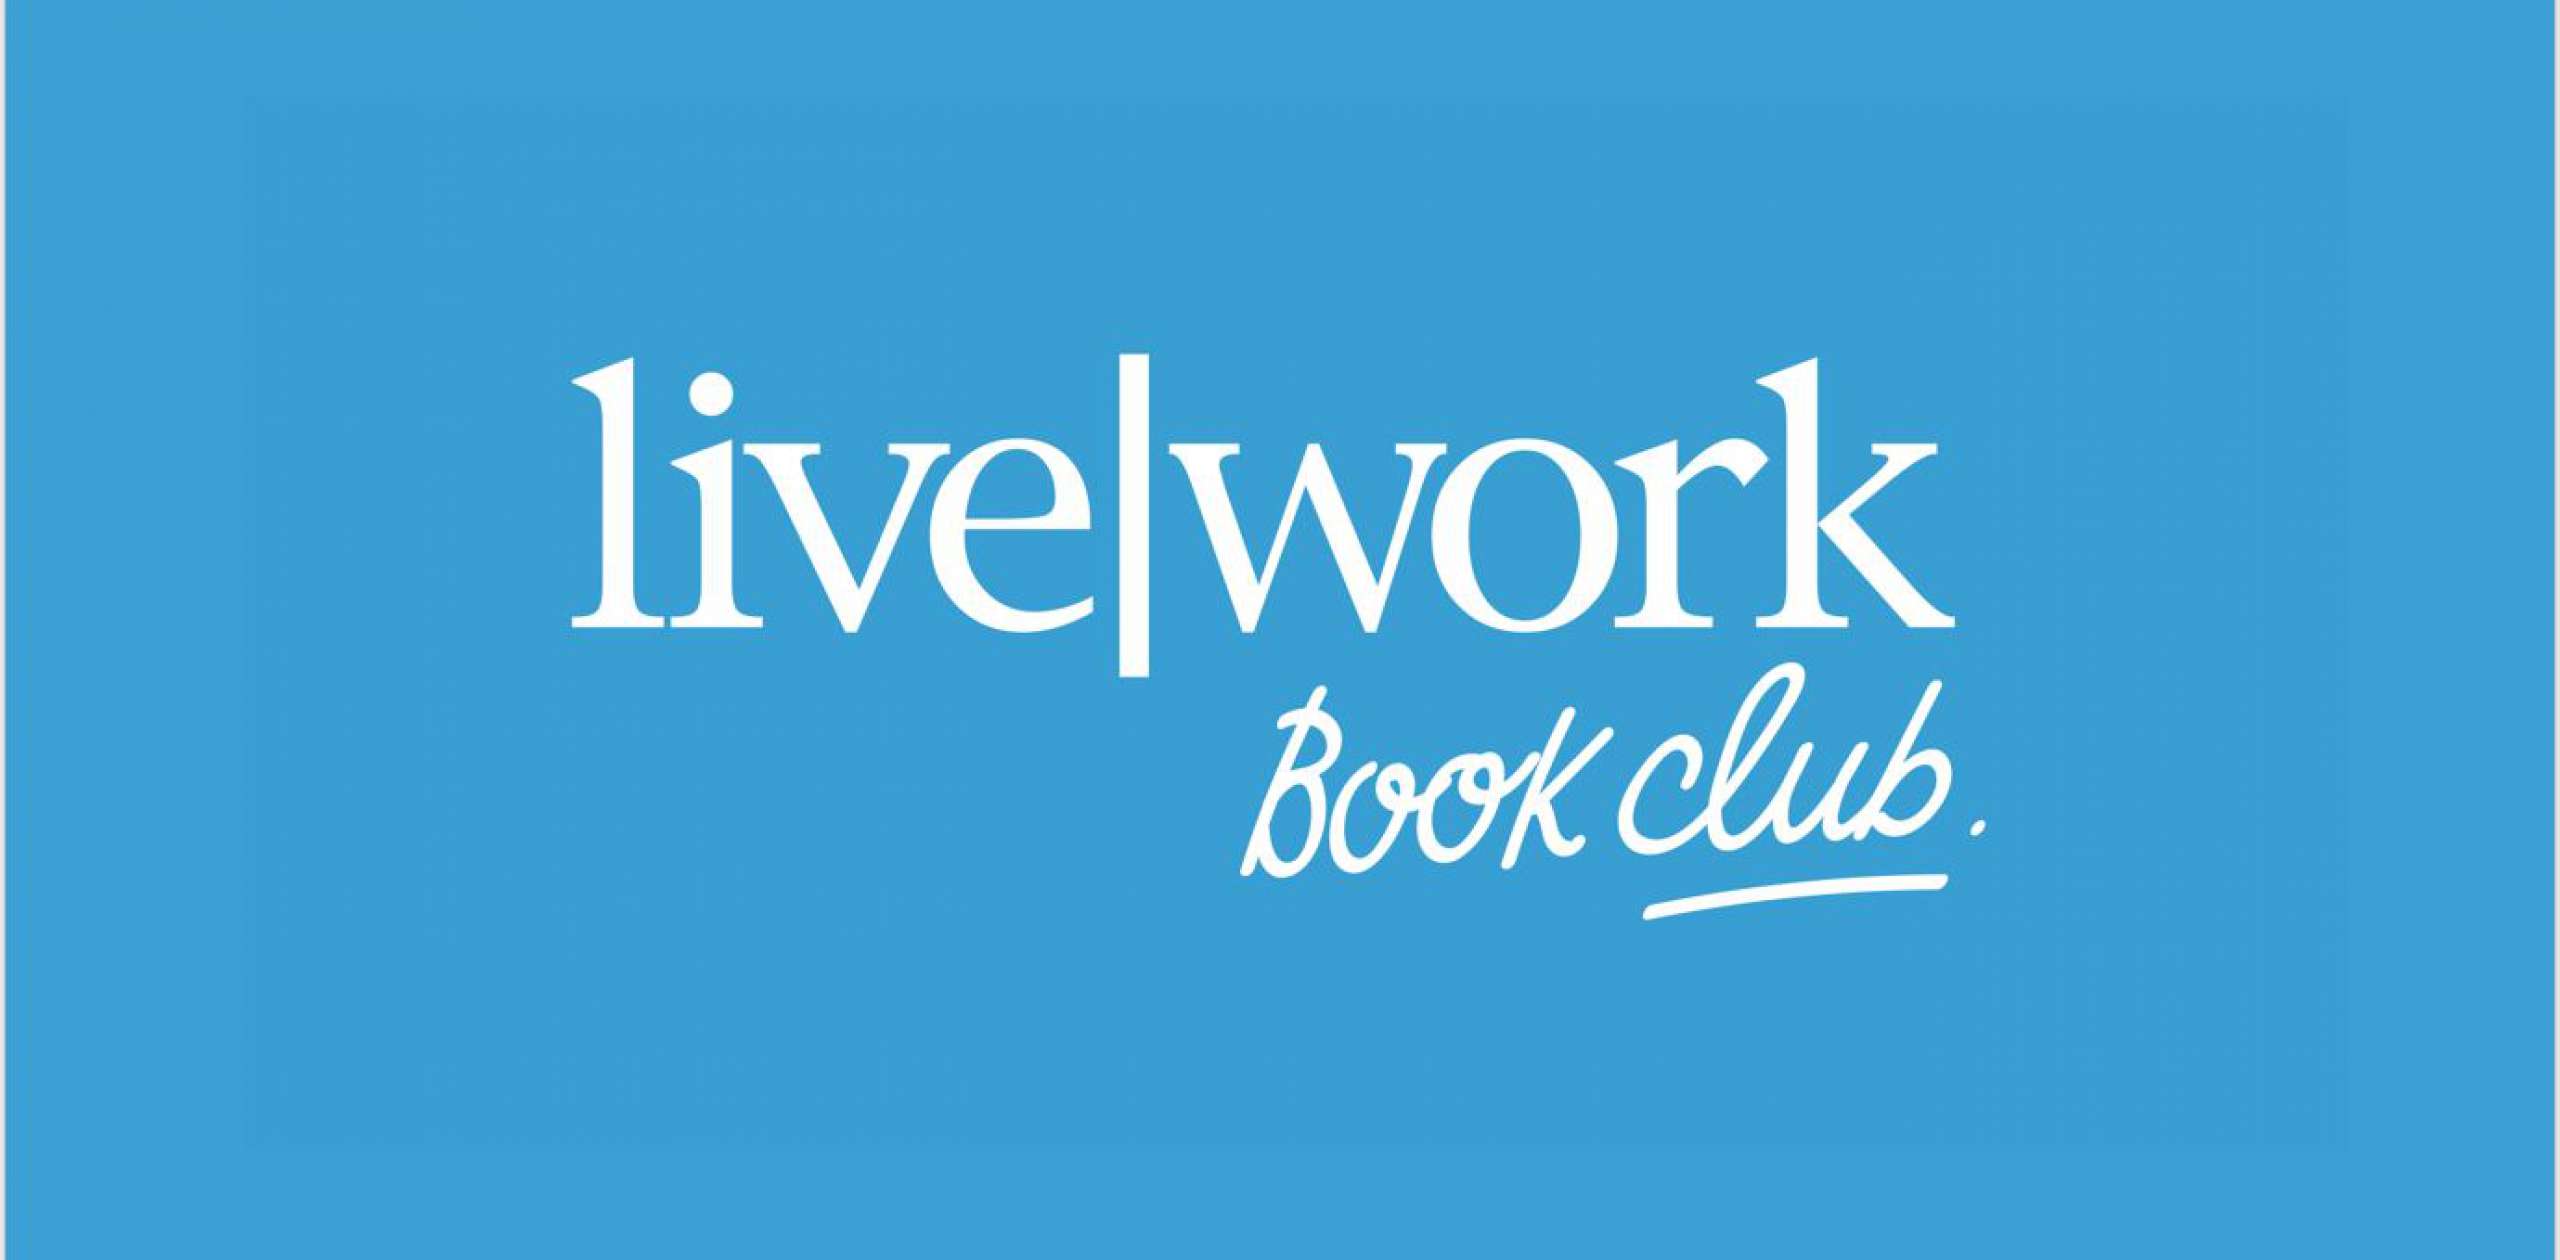 Livework Book Club - Rotterdam